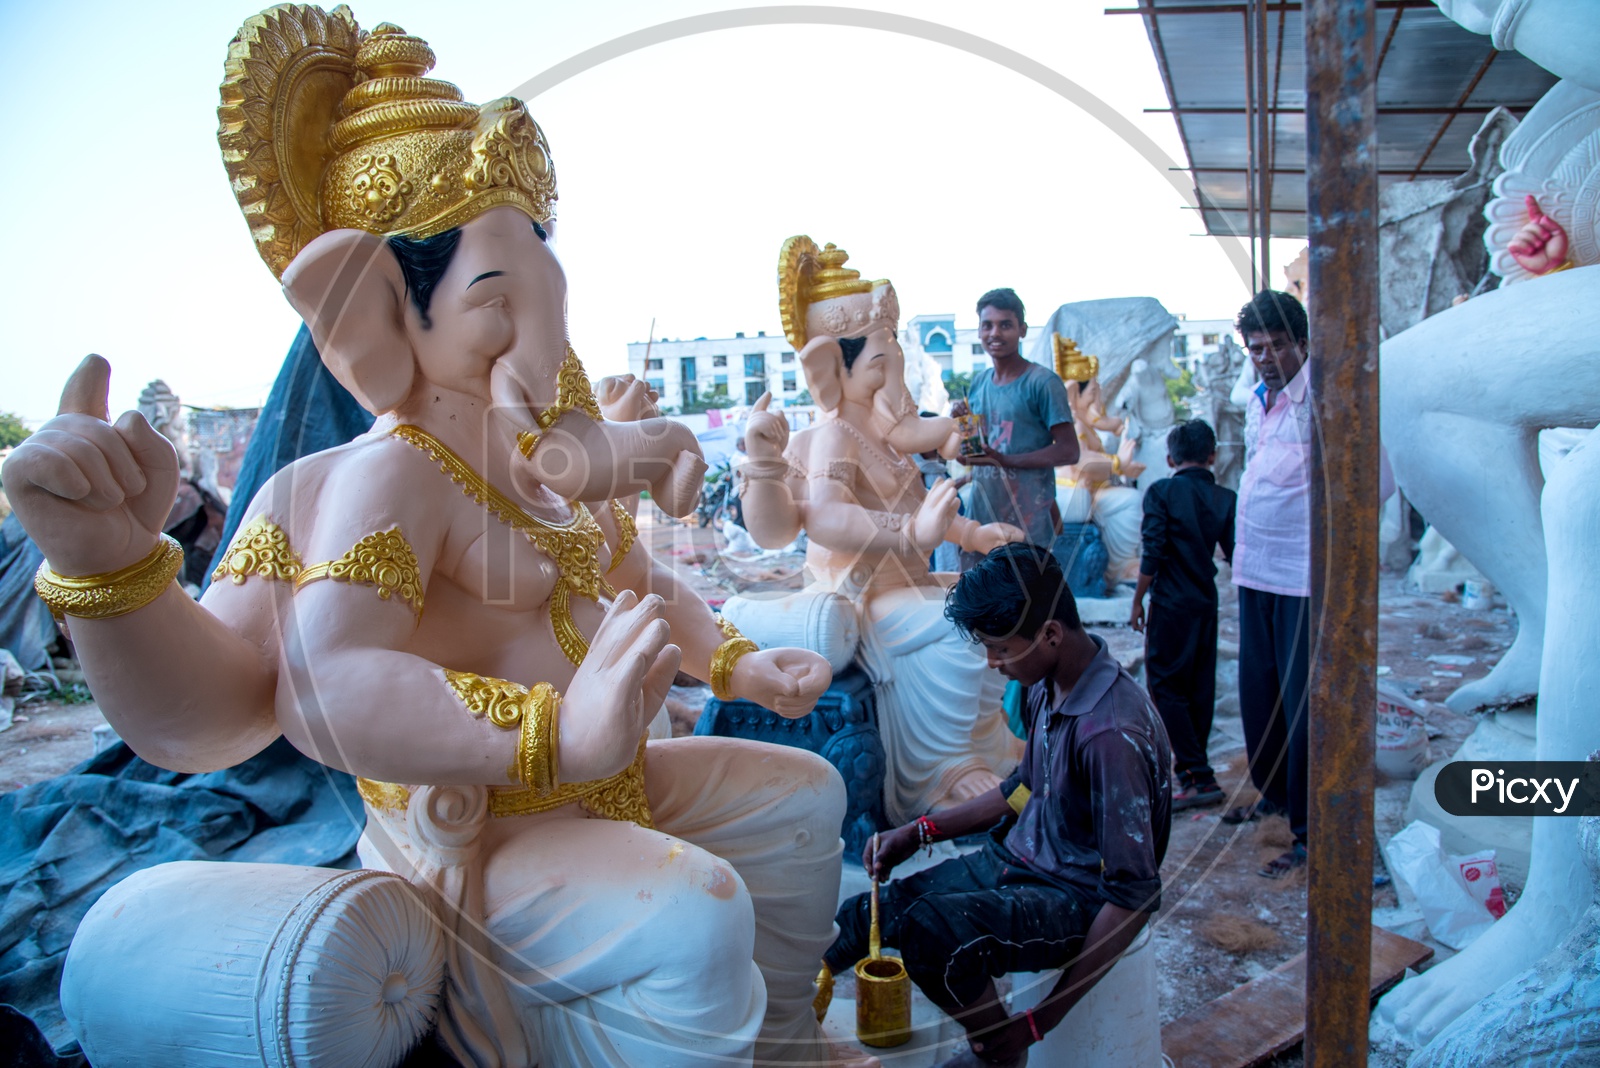 Ganesh Idols In Making  Artists Performing Final Detailing For Lord Ganesh Idols In Workshops For Ganesh Festival Or Ganesh Chathurdhi or Vinayaka Chavithi